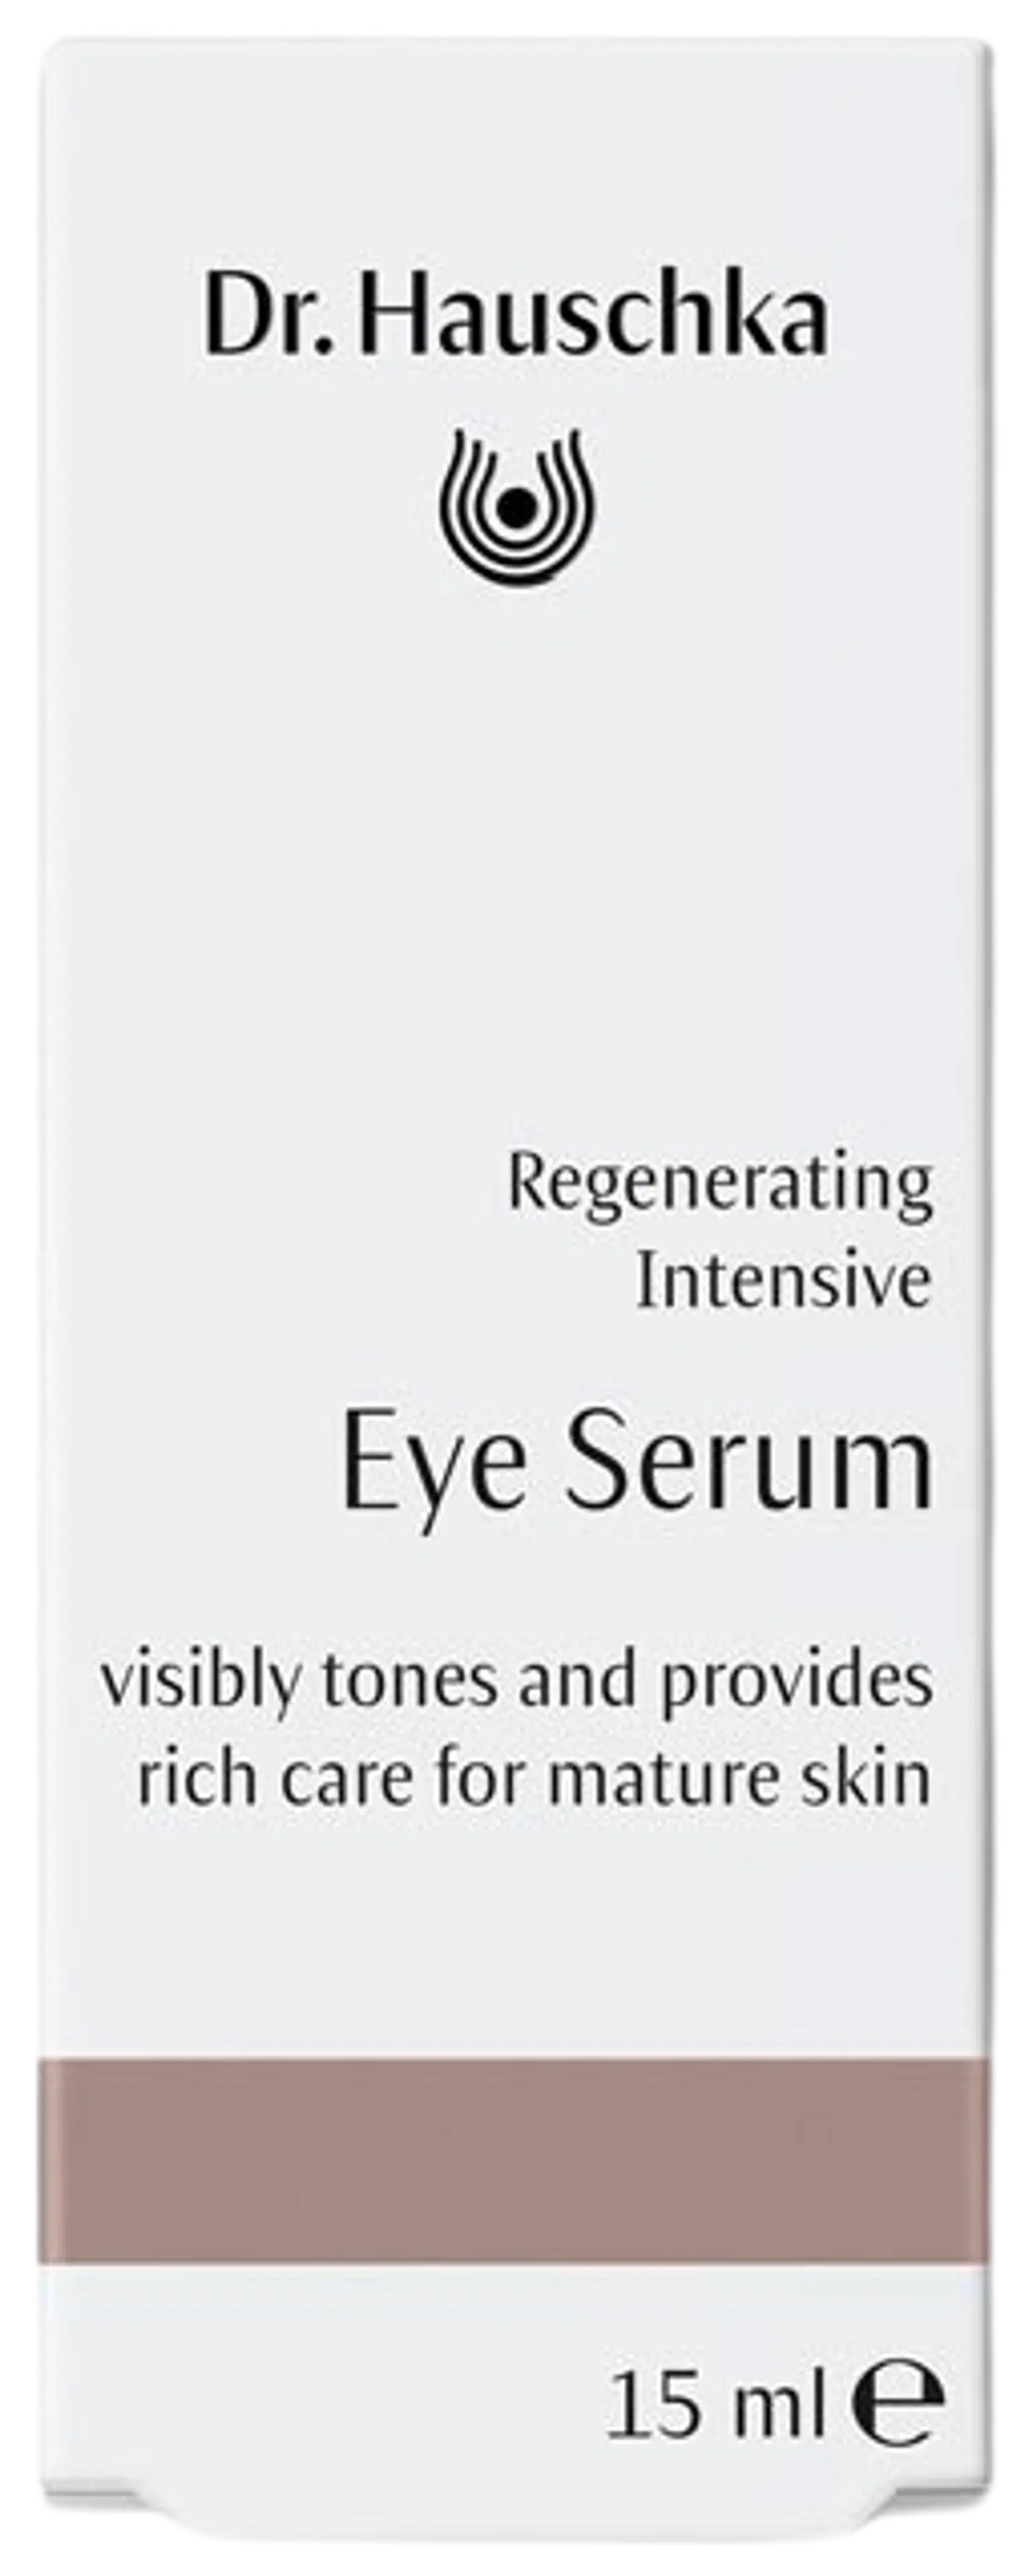 Dr. Hauschka Regenerating Intensive Eye Serum silmänympärysseerumi 15 ml